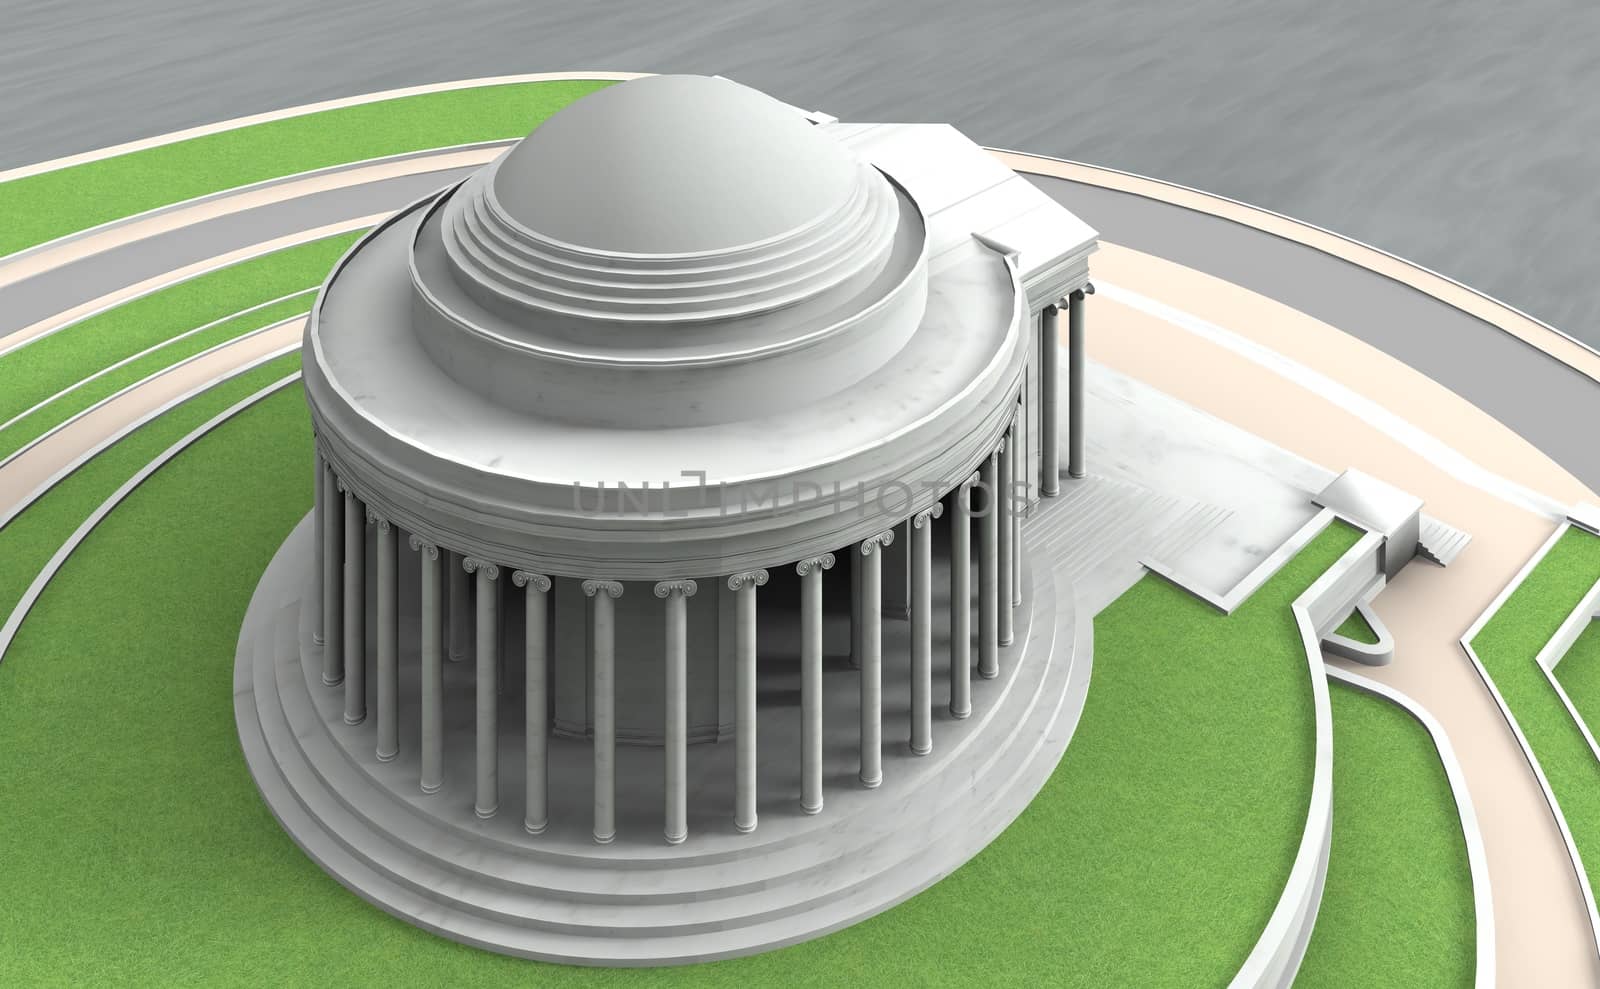 Jefferson Memorial 7 by 3DAgentur